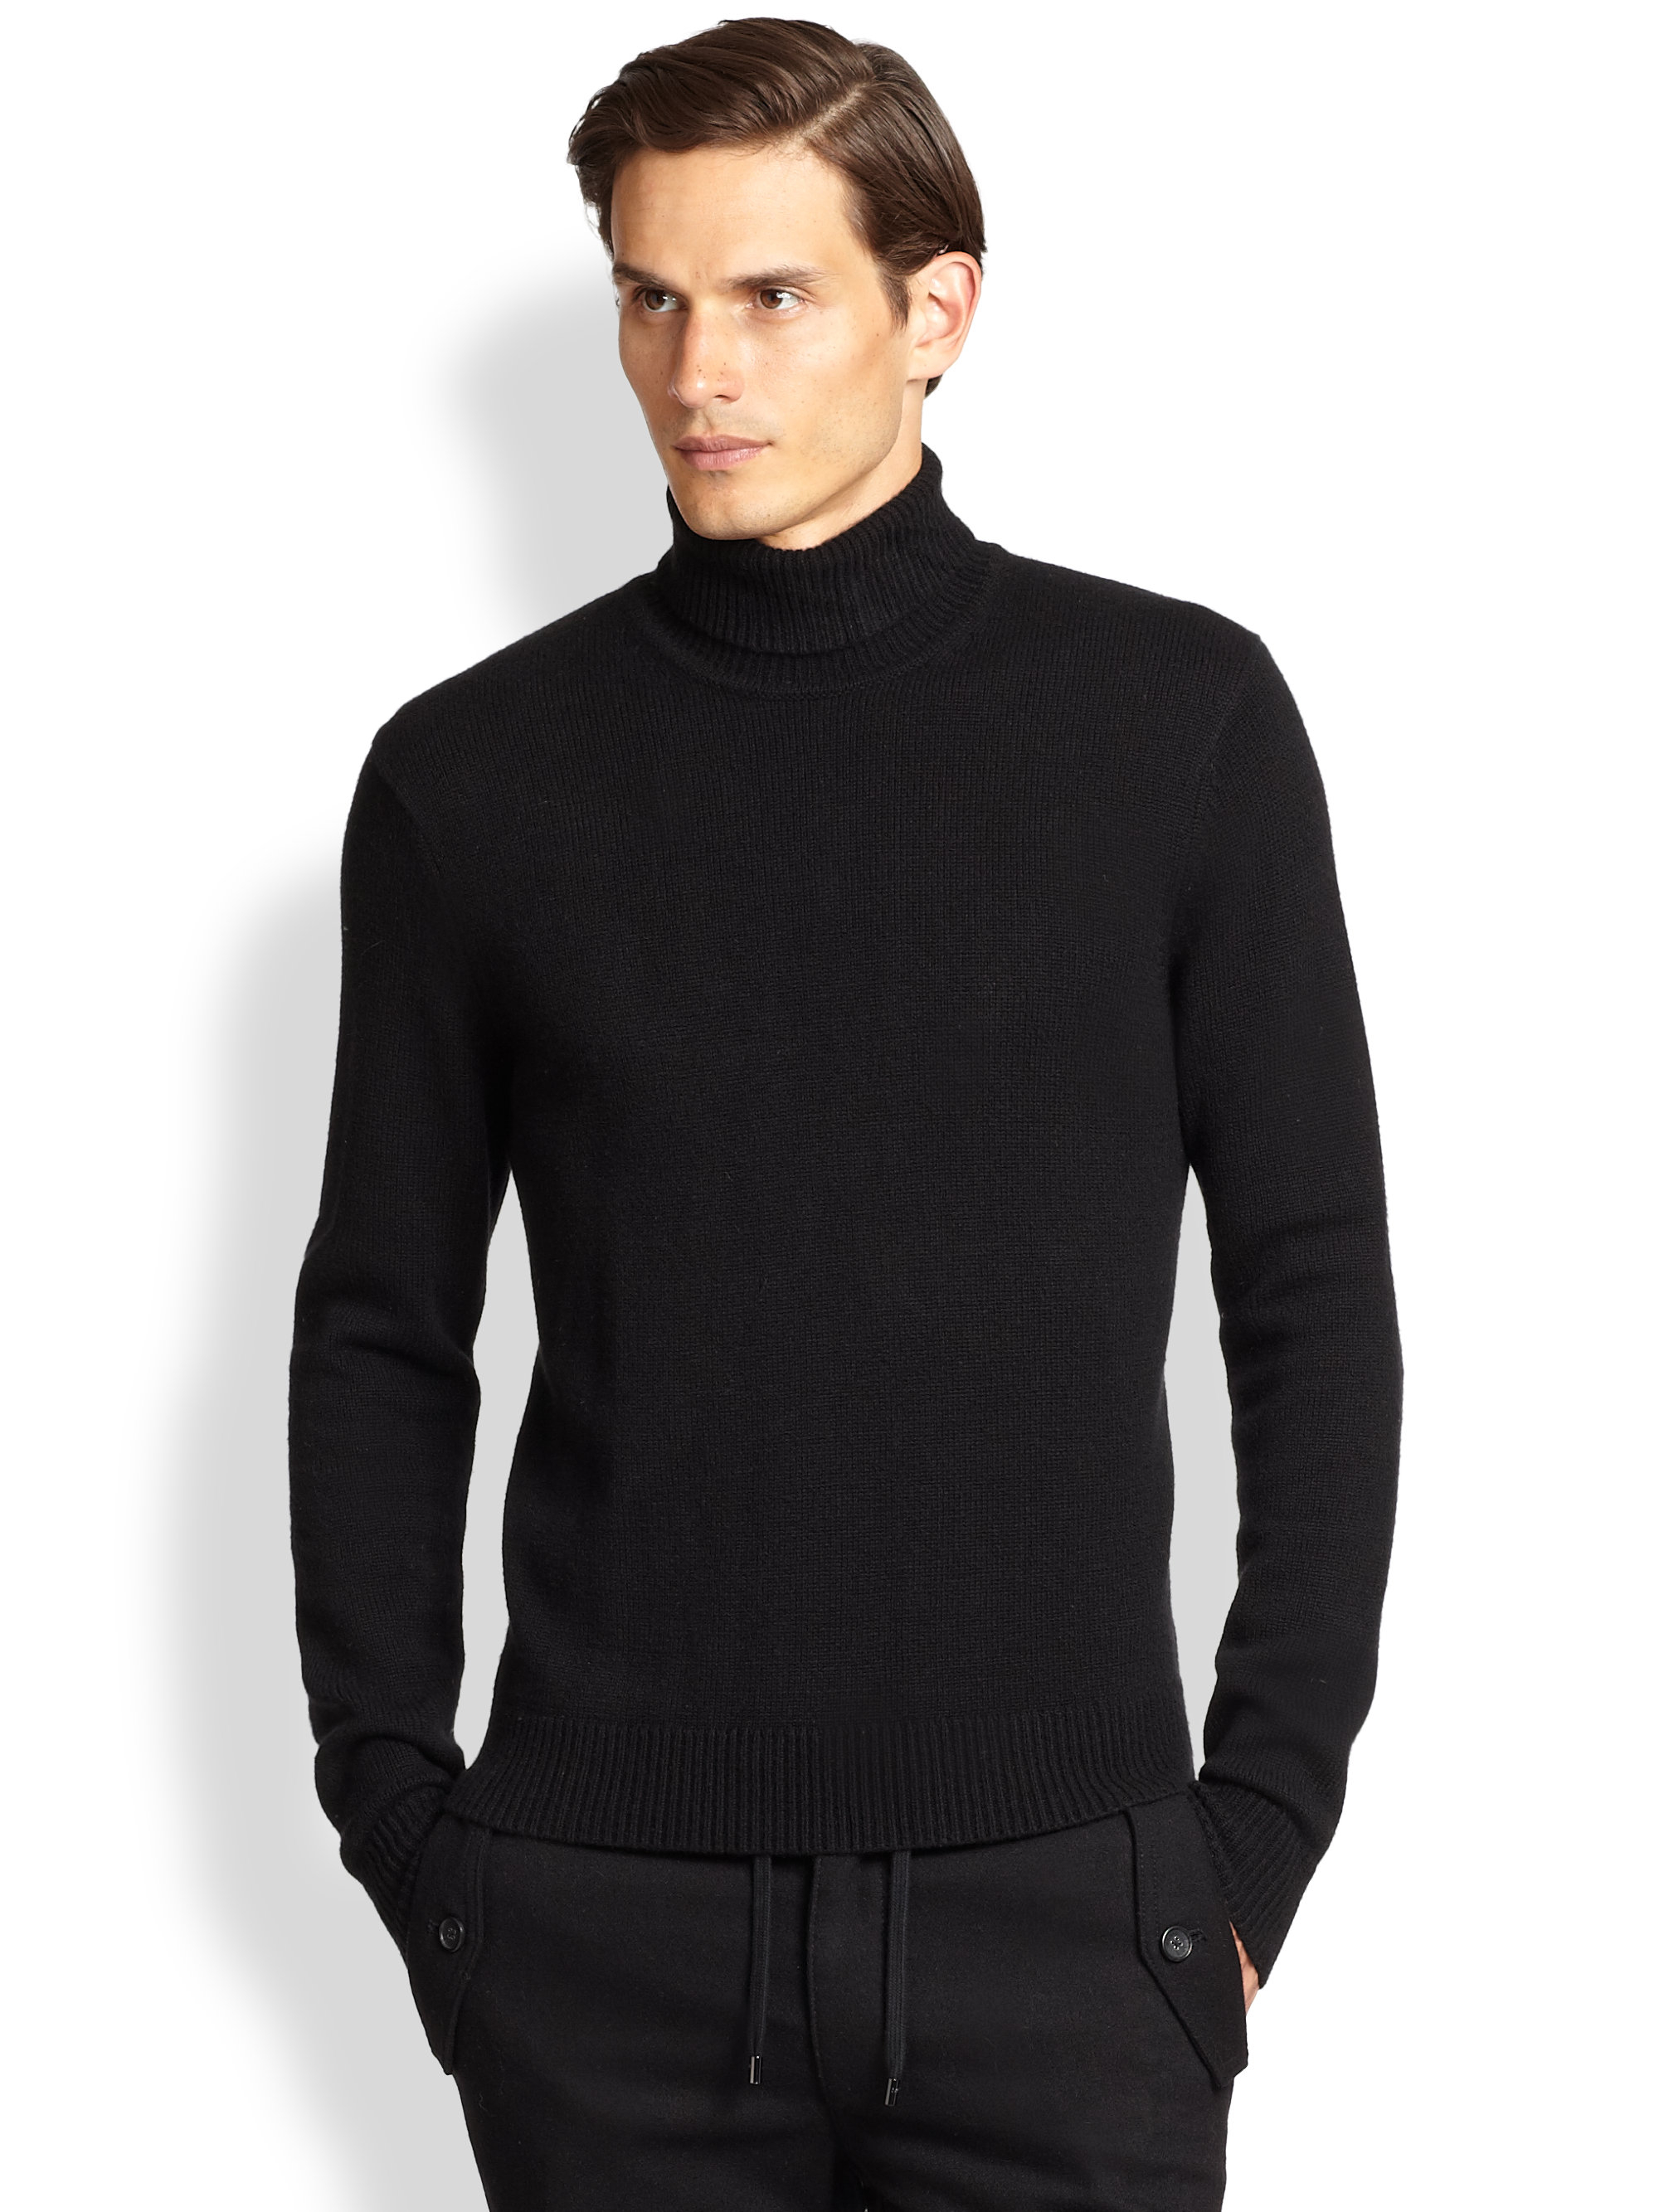 michael kors black turtleneck sweater